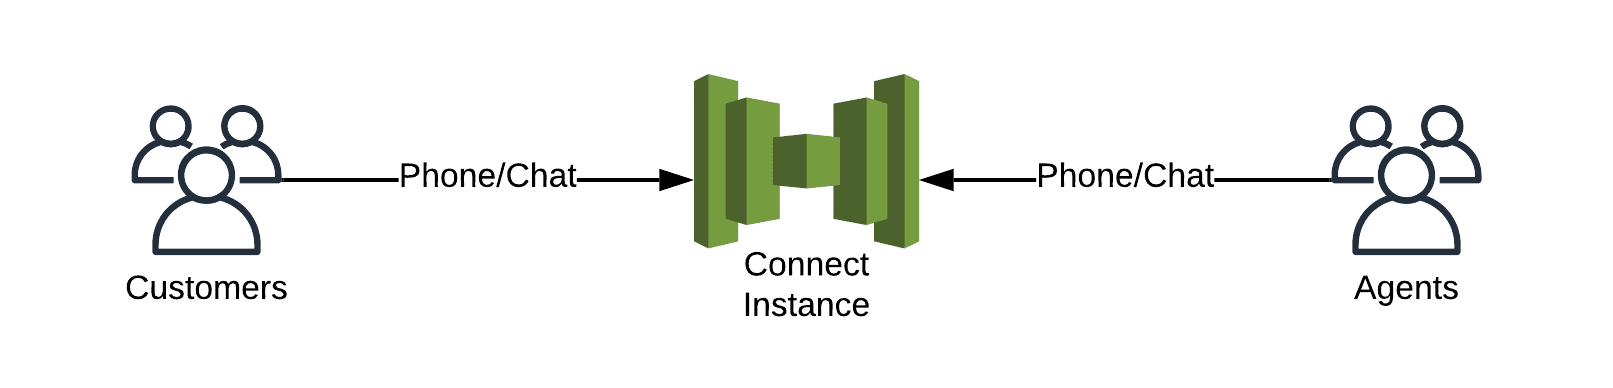 Amazon Connect: Instance